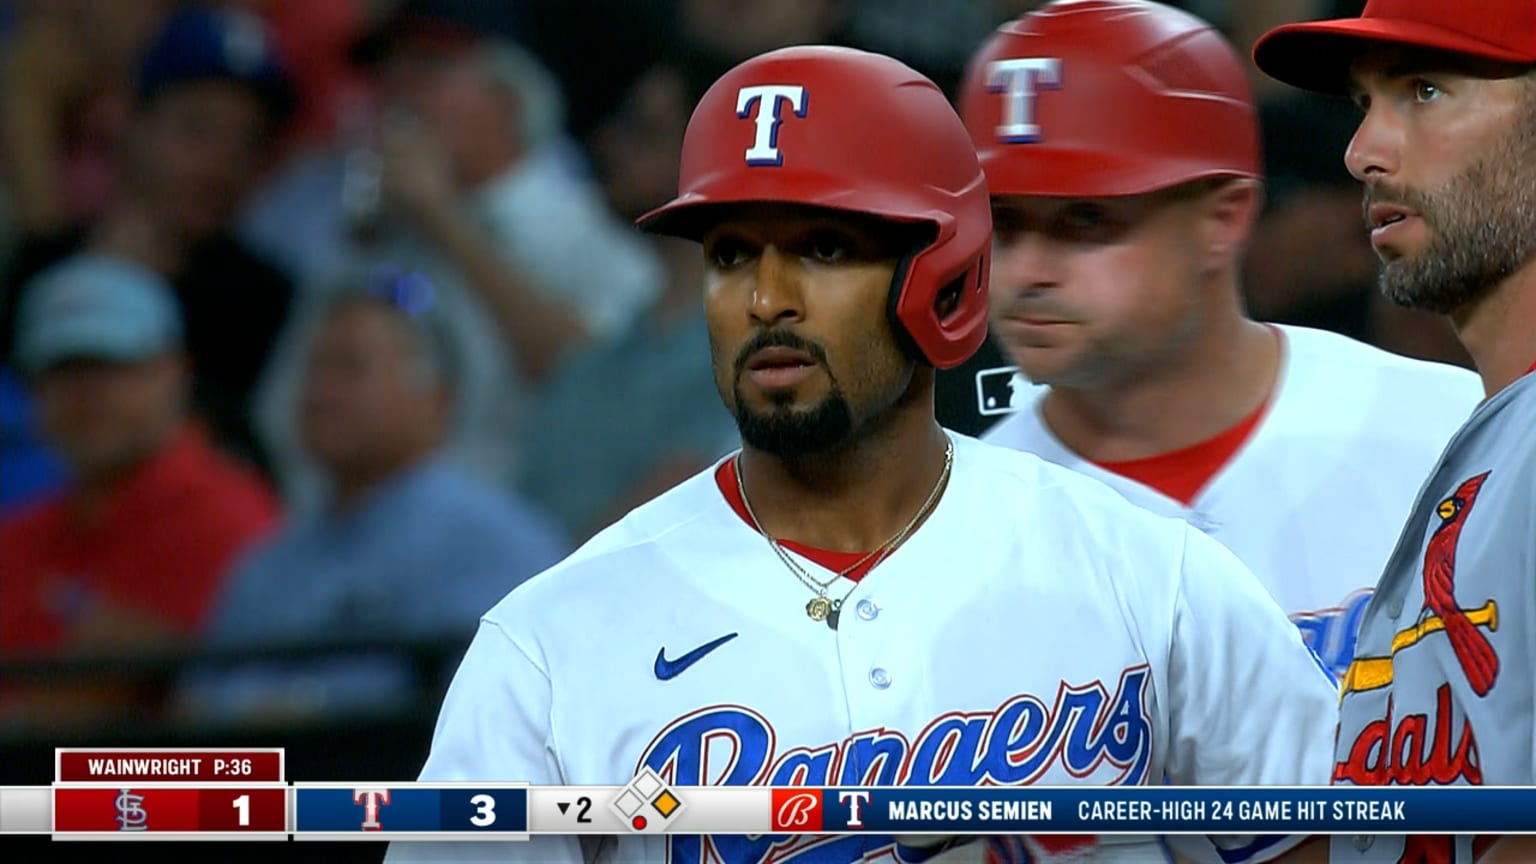 MLB Rumors: Texas Rangers calling up Ezequiel Duran - Lone Star Ball